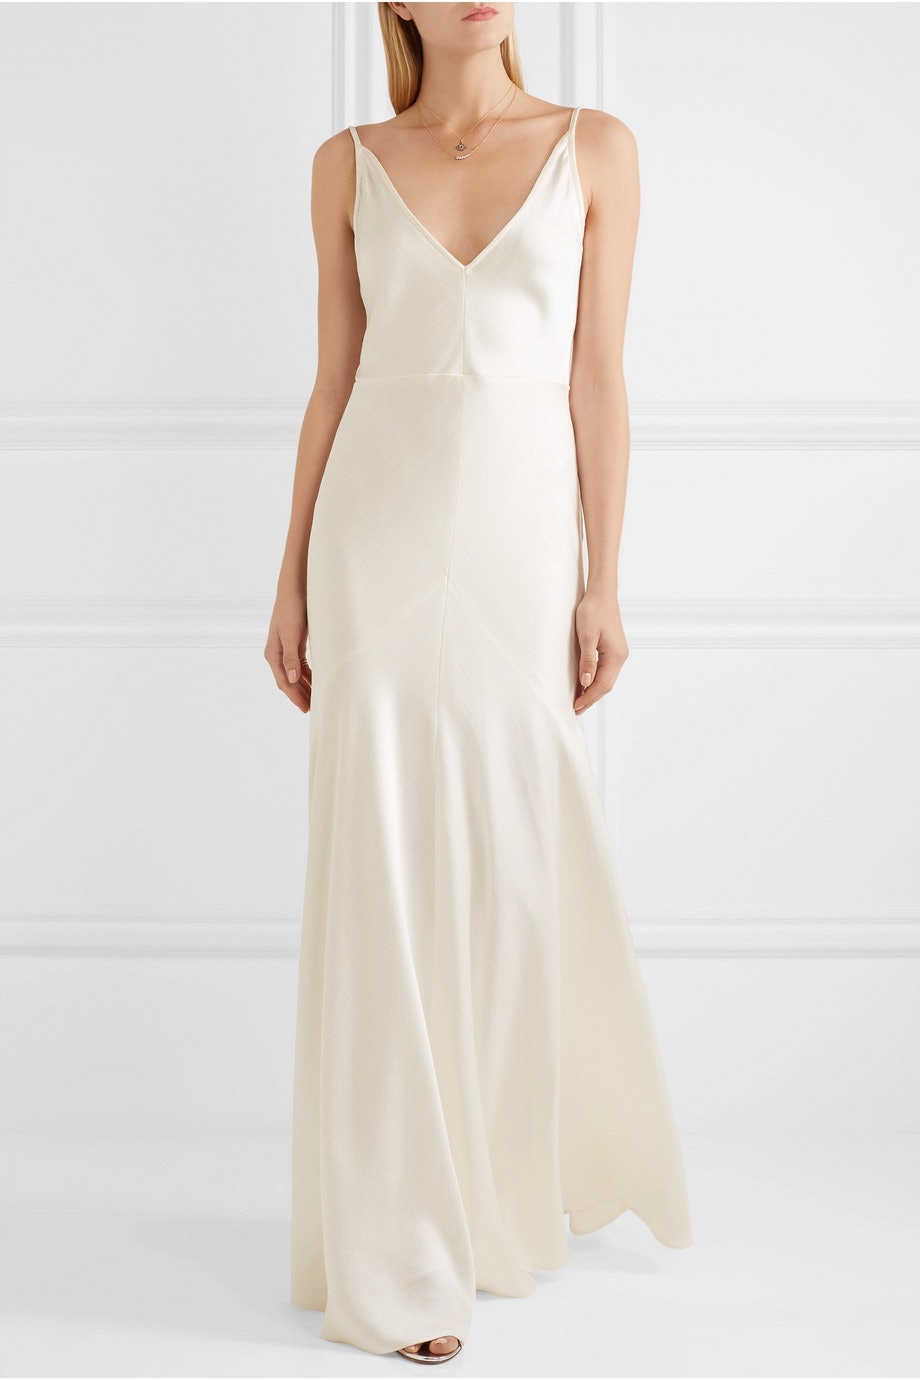 carolyn bessette style wedding dress, OFF 71%,Cheap!